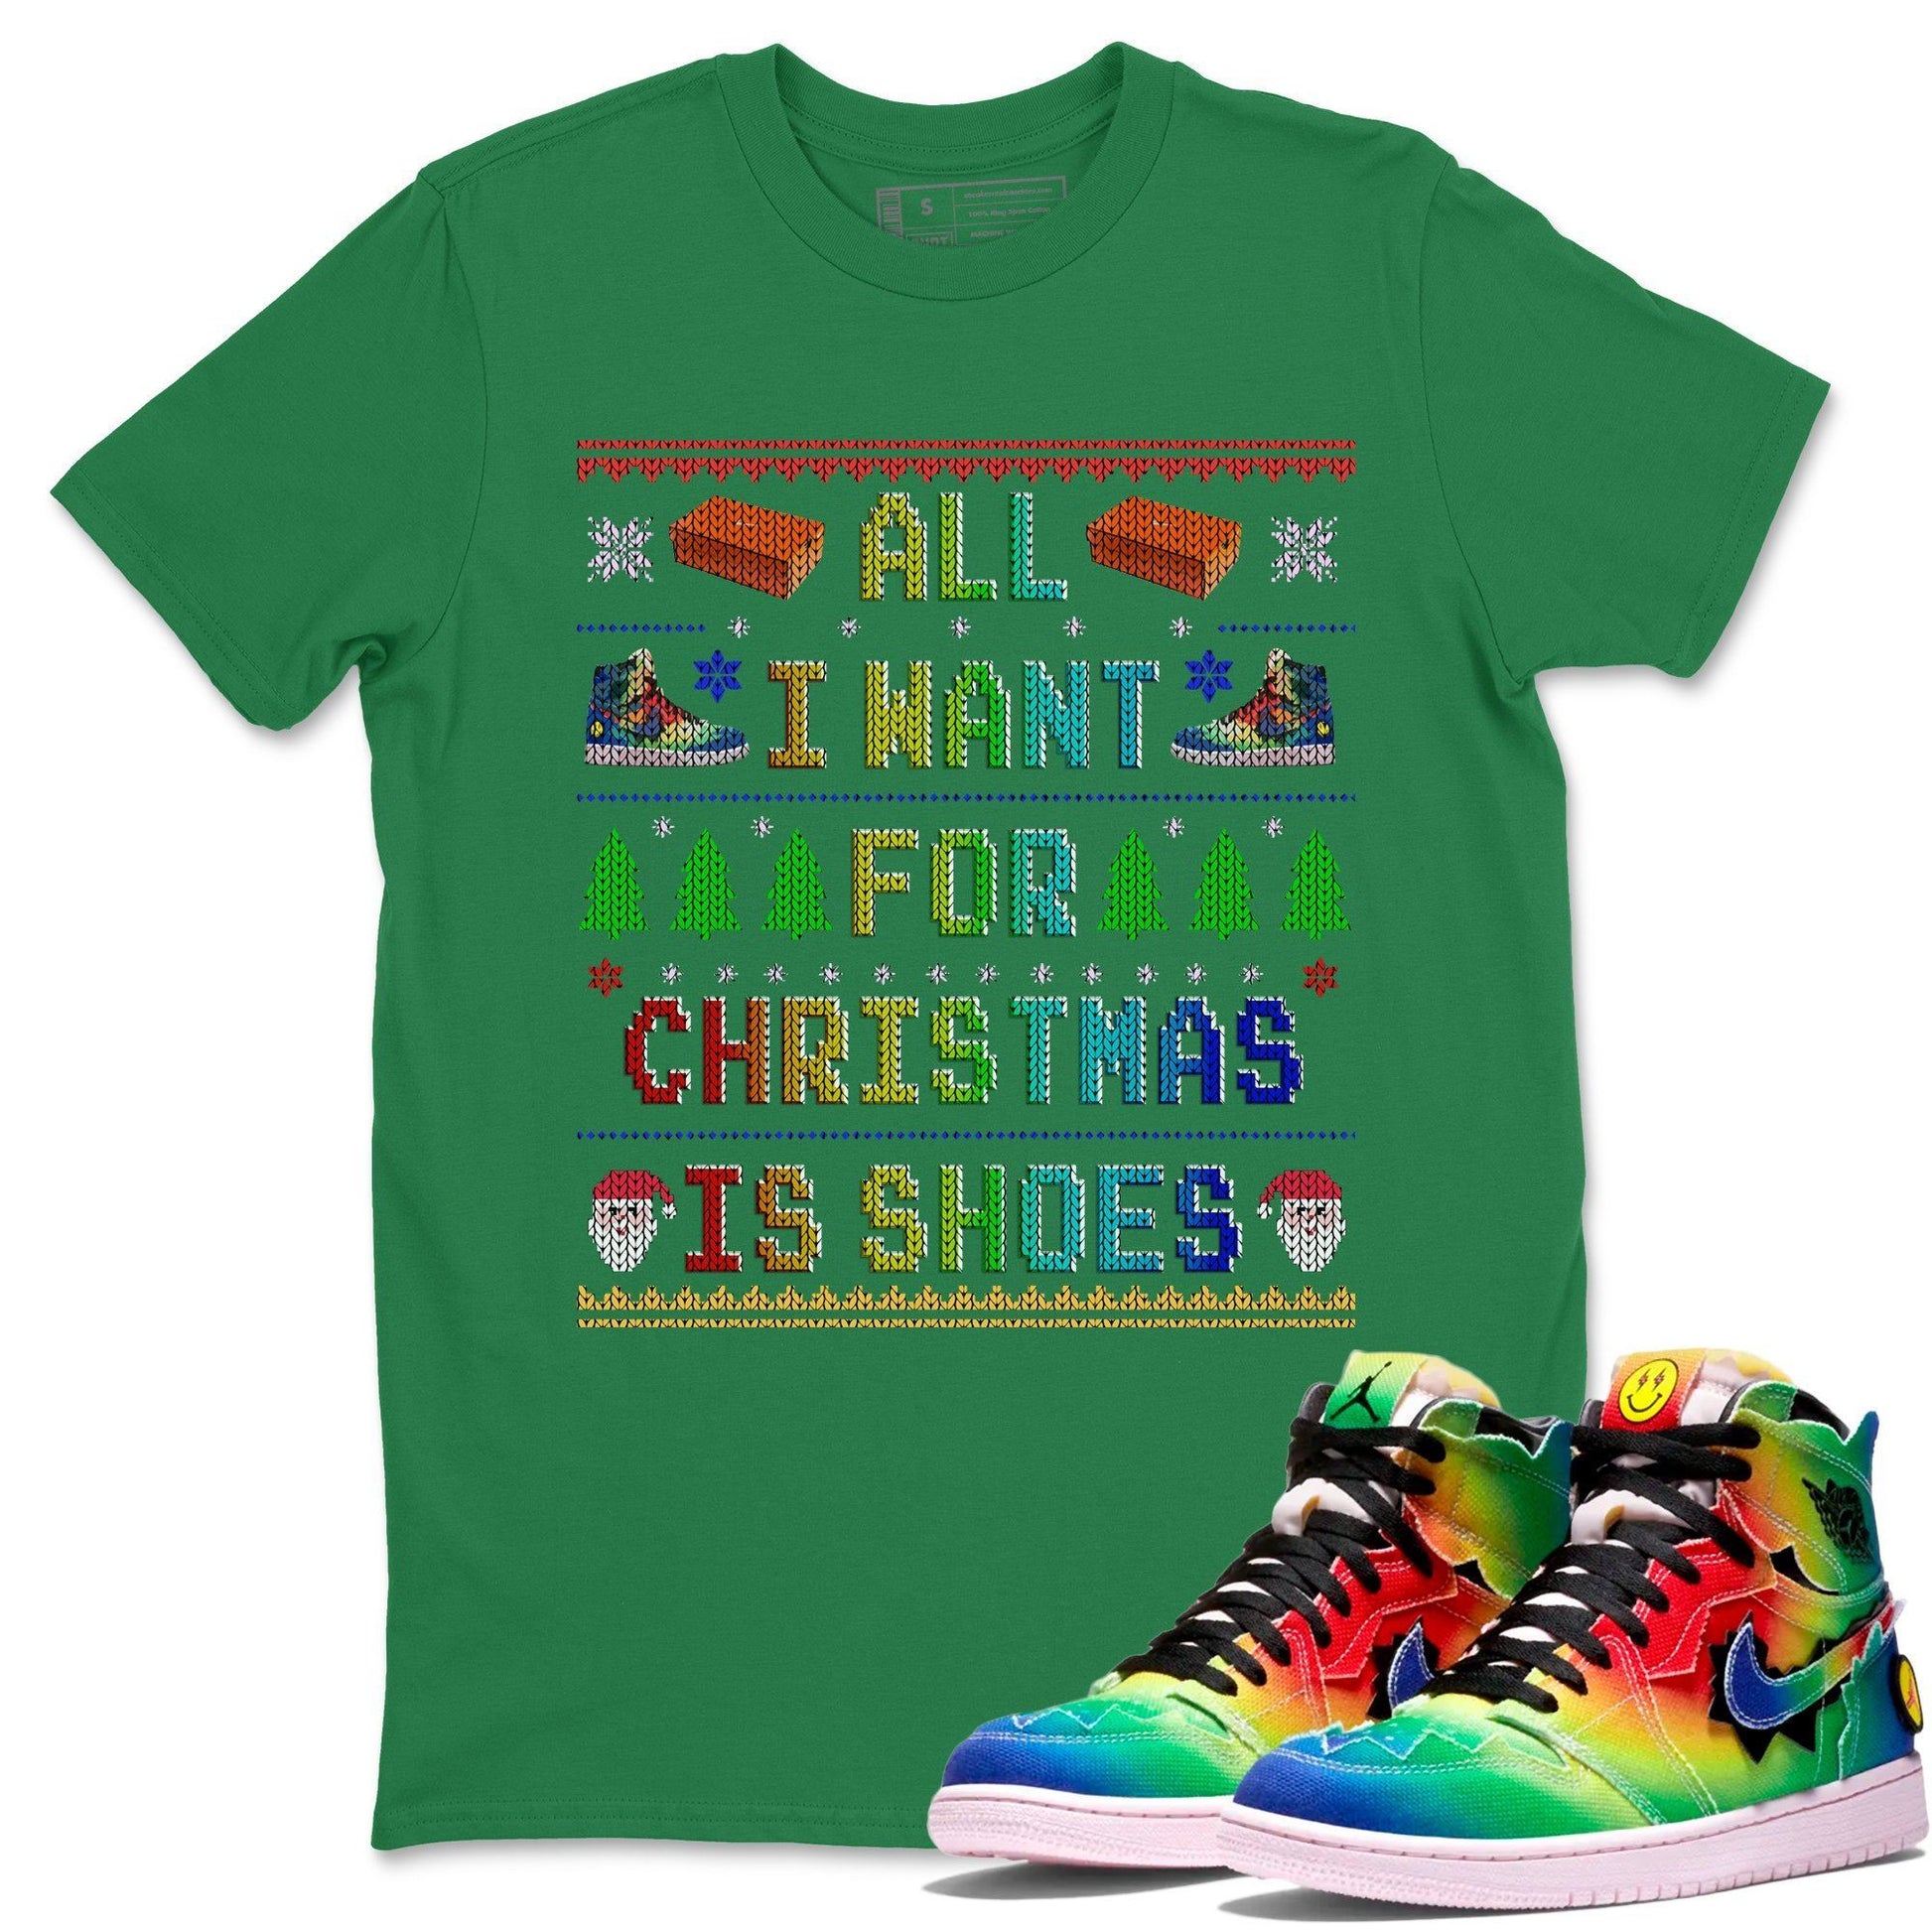 Jordan 1 J Balvin Sneaker Match Tees All I Want For Christmas Is Shoes Sneaker Tees Jordan 1 J Balvin Sneaker Release Tees Unisex Shirts